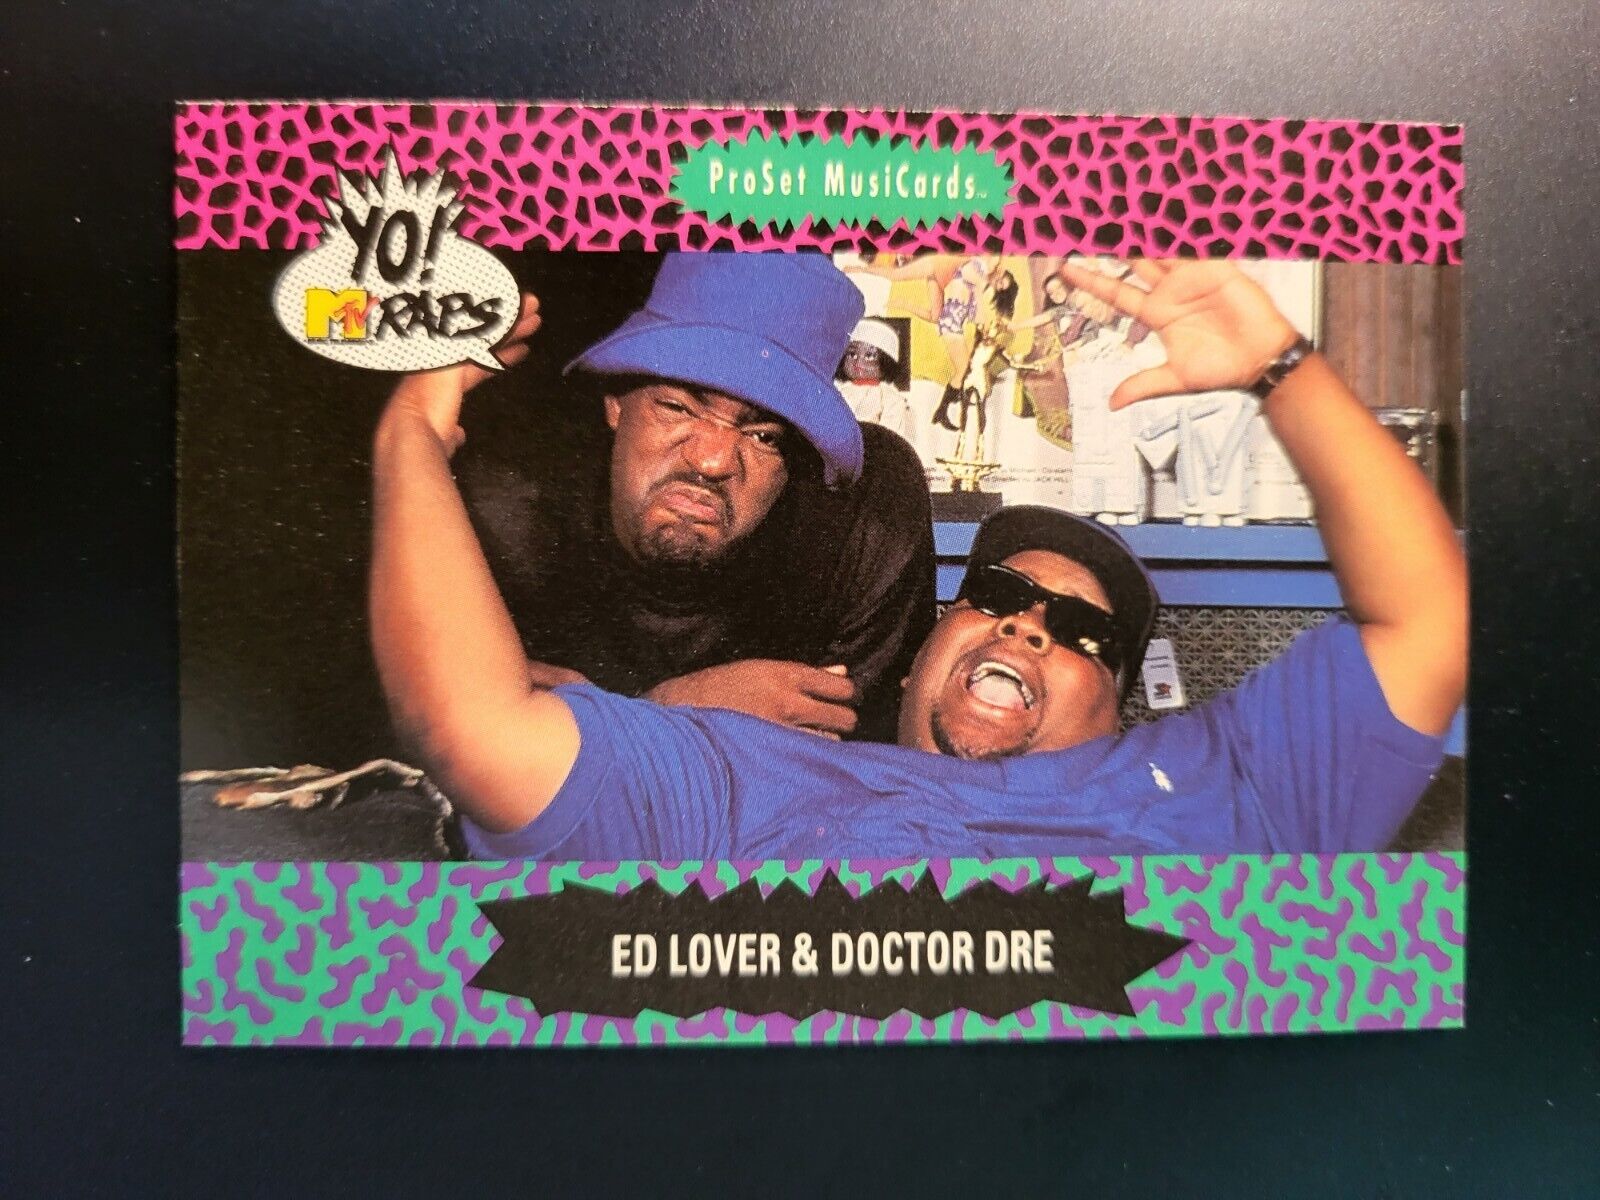 1991 ProSet MusiCards YO MTV Raps Ed Lover Dr Dre RC card #118